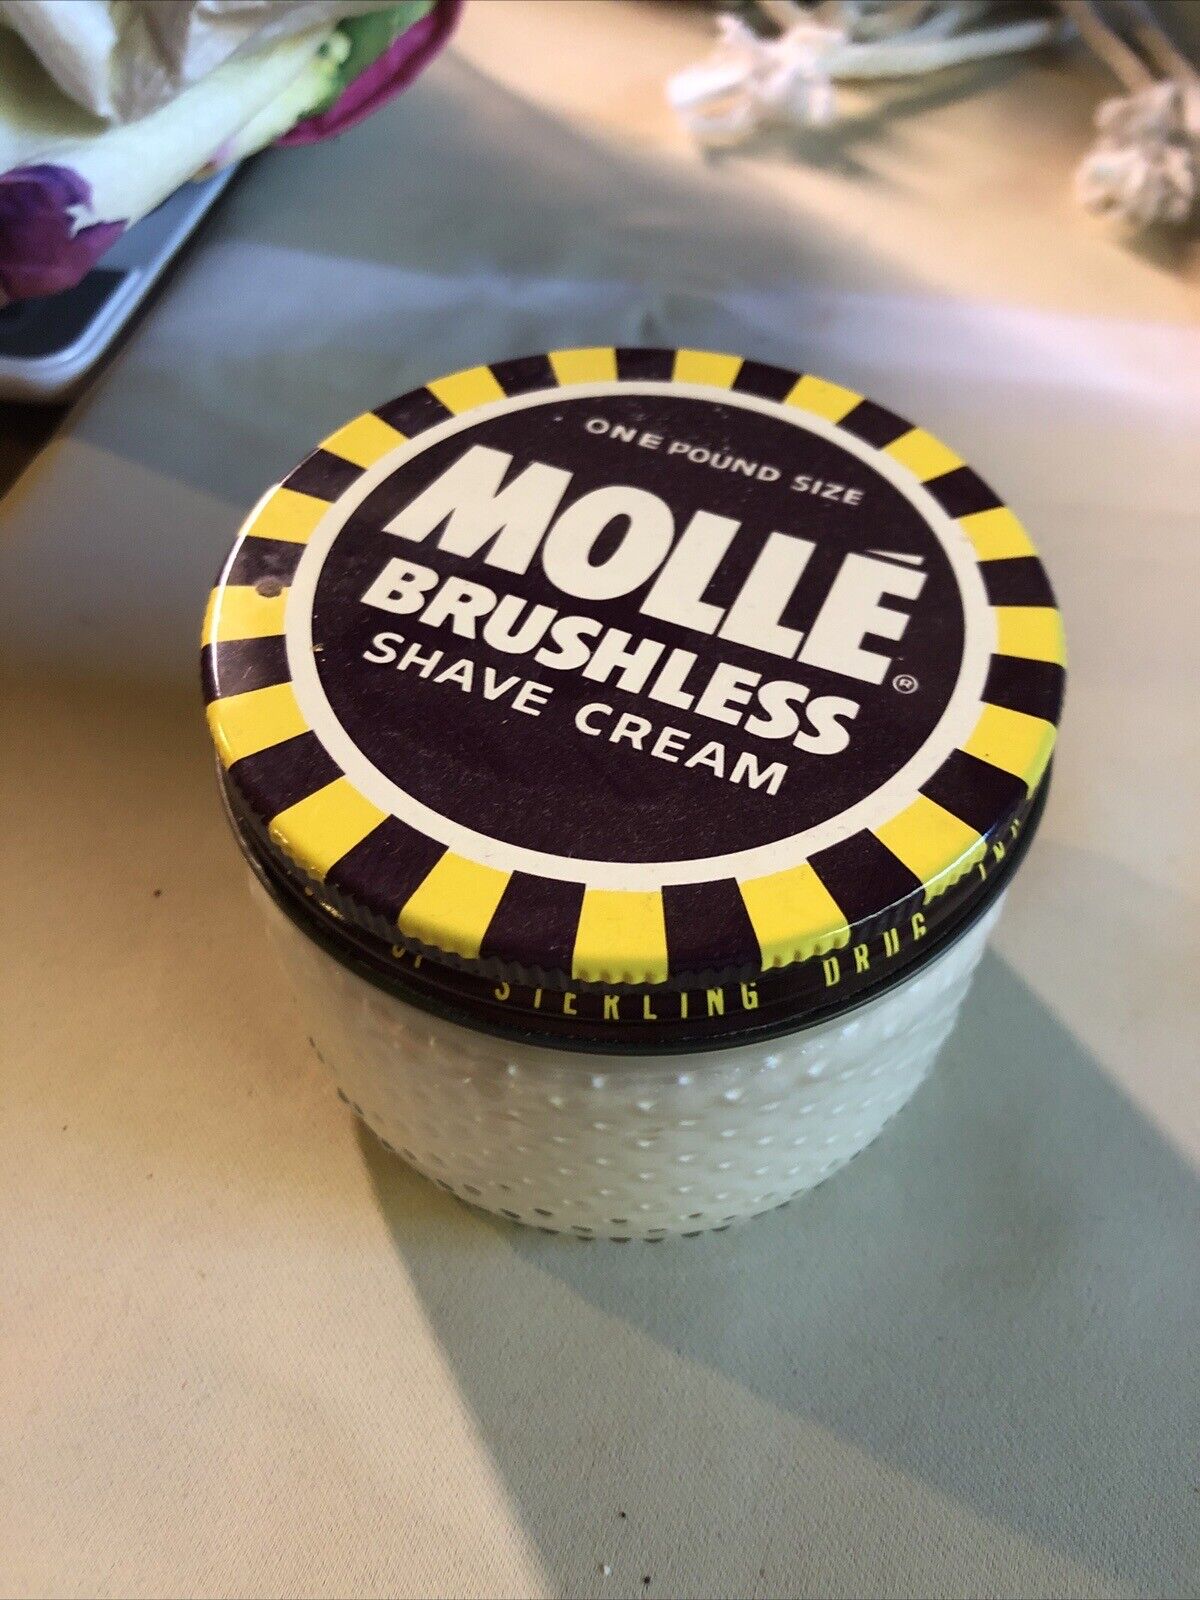 Vintage Full Molle Brushless Shaving Cream 1 Pound Jar Rare Find